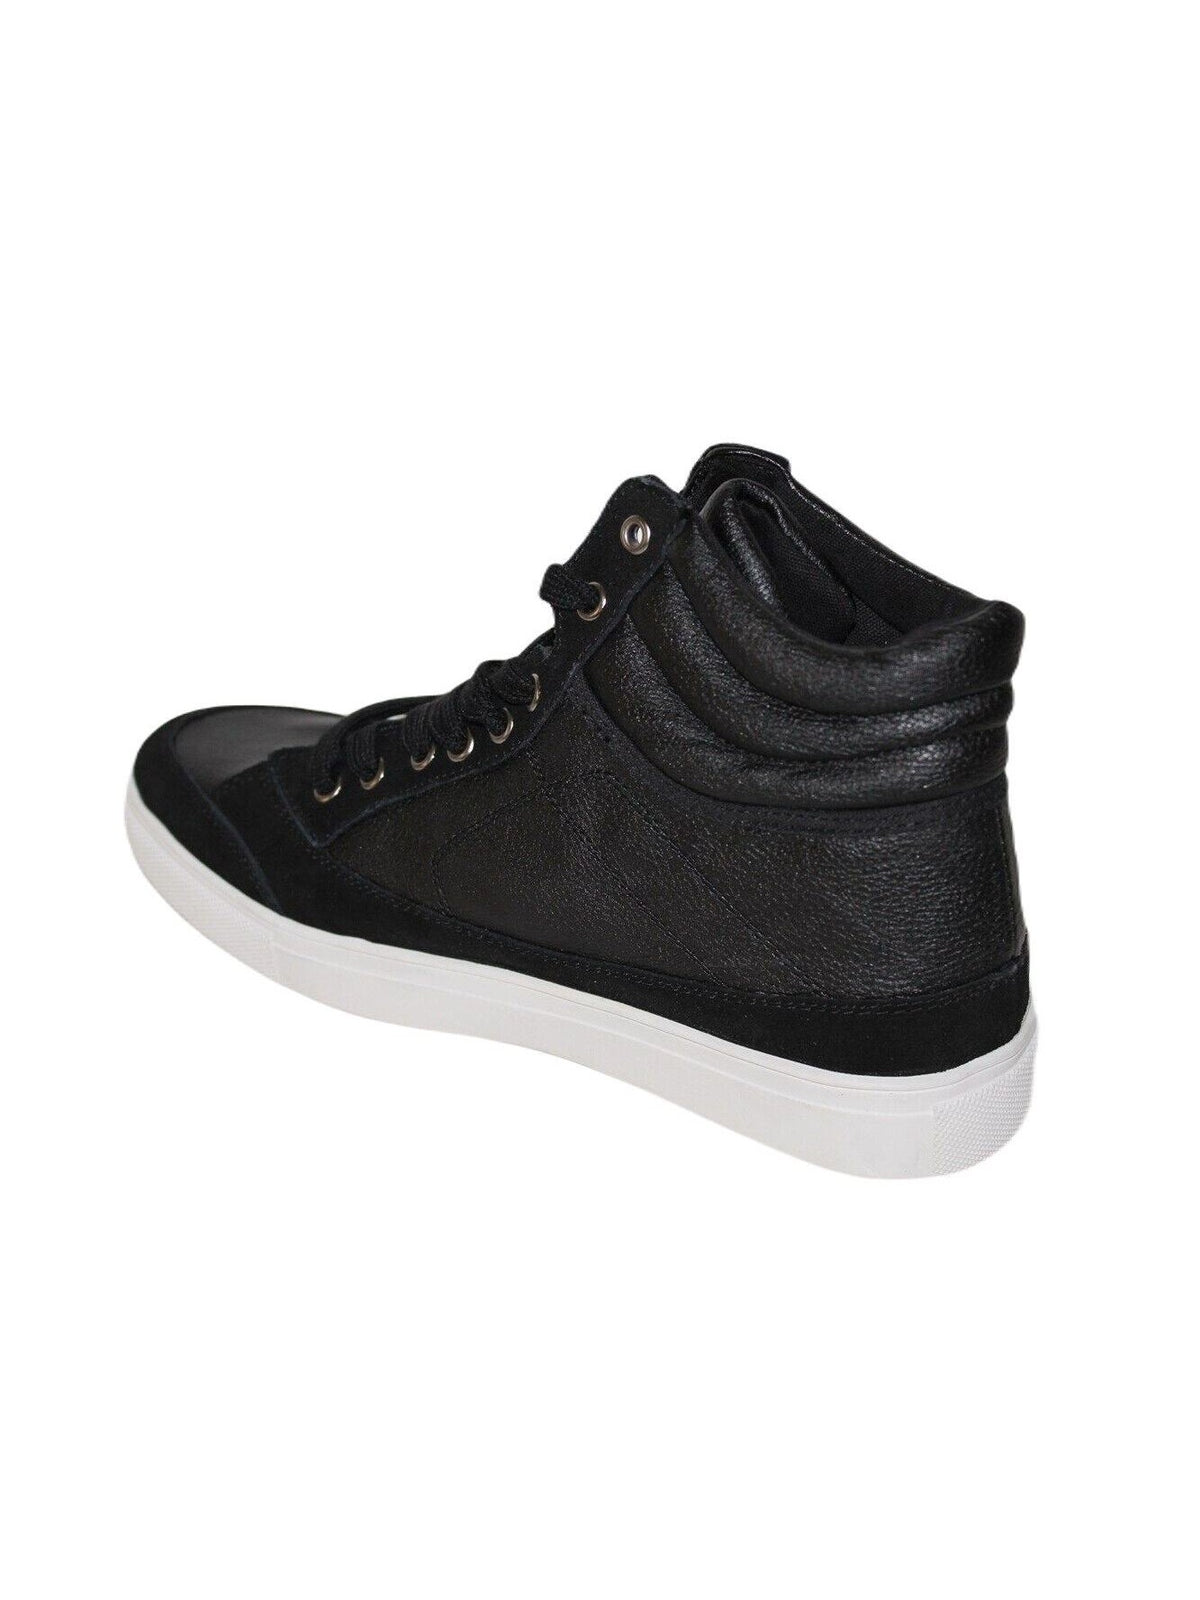 Urge - Colaco High Top Shoes - Black